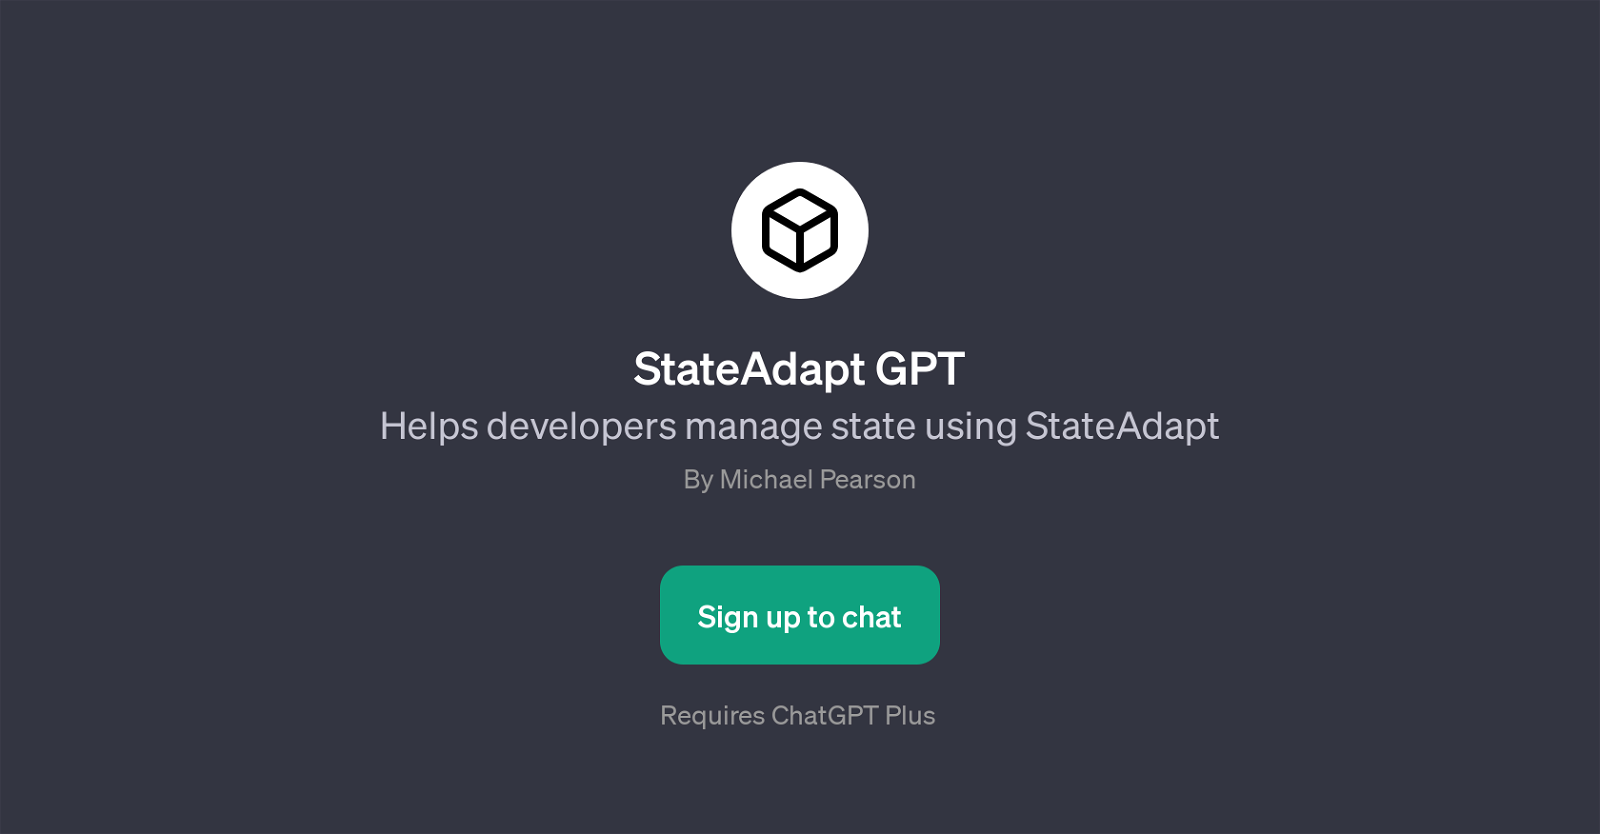 StateAdapt GPT website